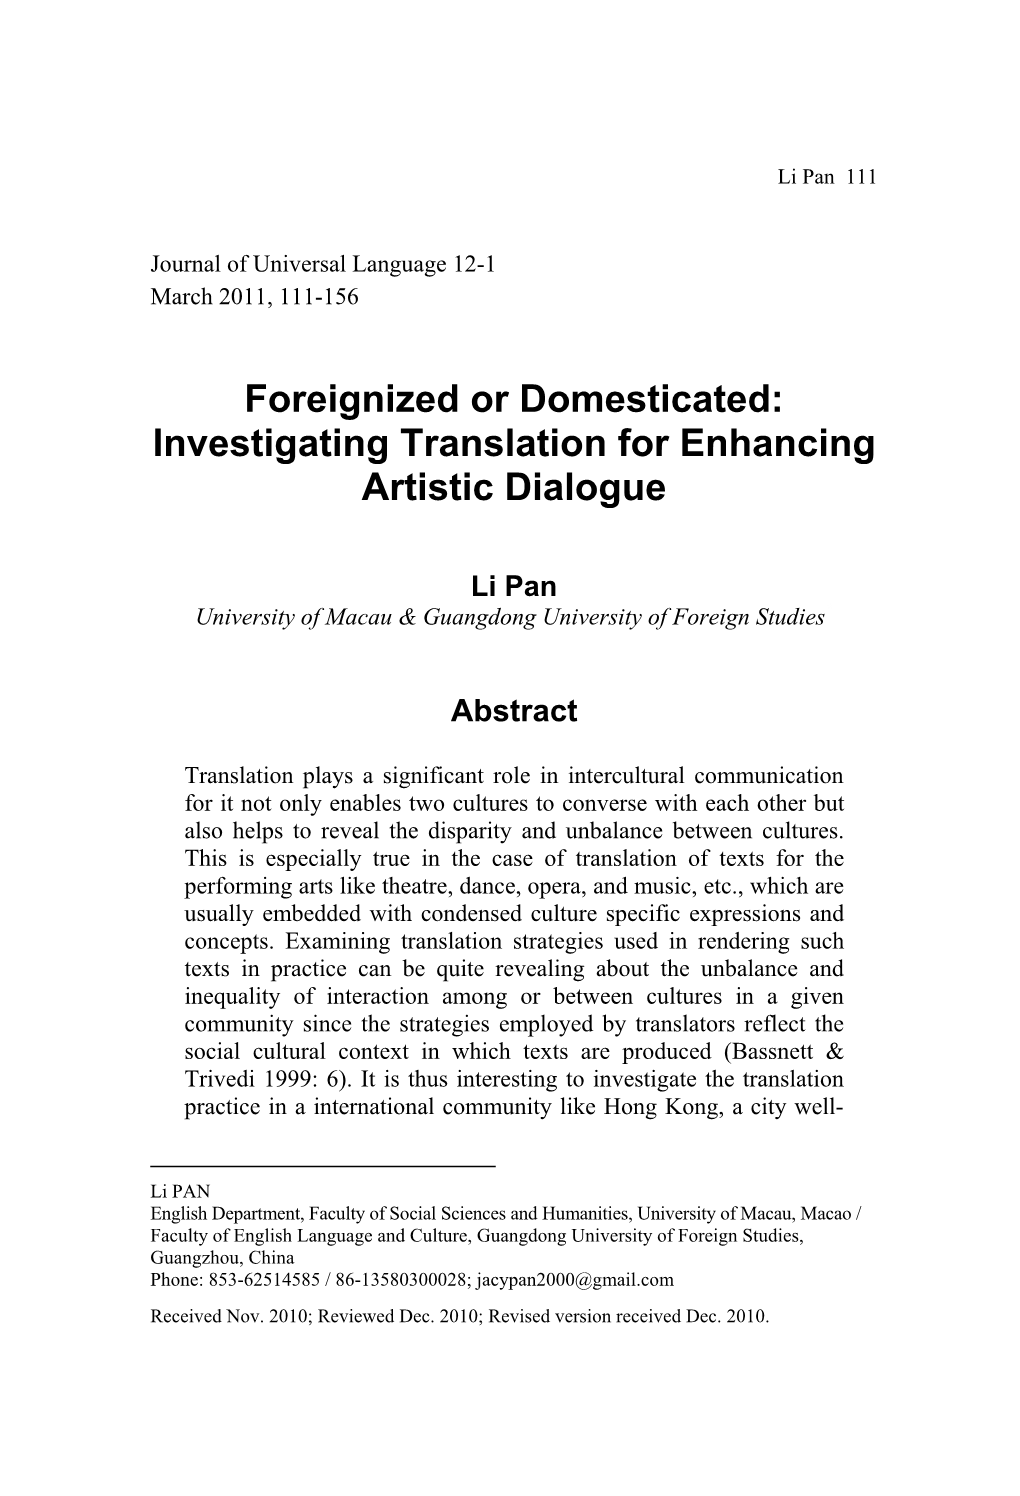 Investigating Translation for Enhancing Artistic Dialogue